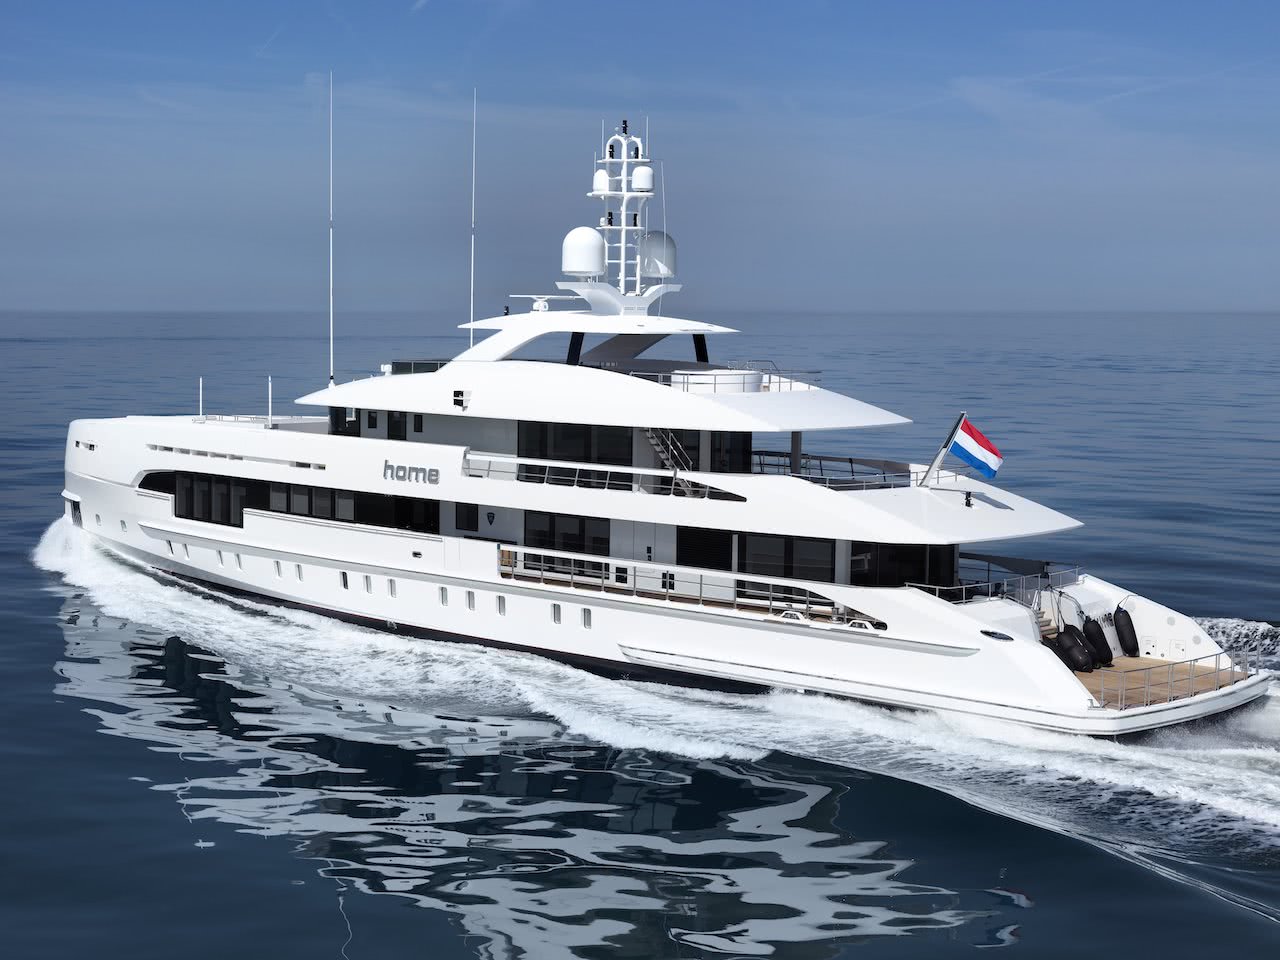 Home Yacht 50m Hybrid Luxury Motor Yacht By Heesen 